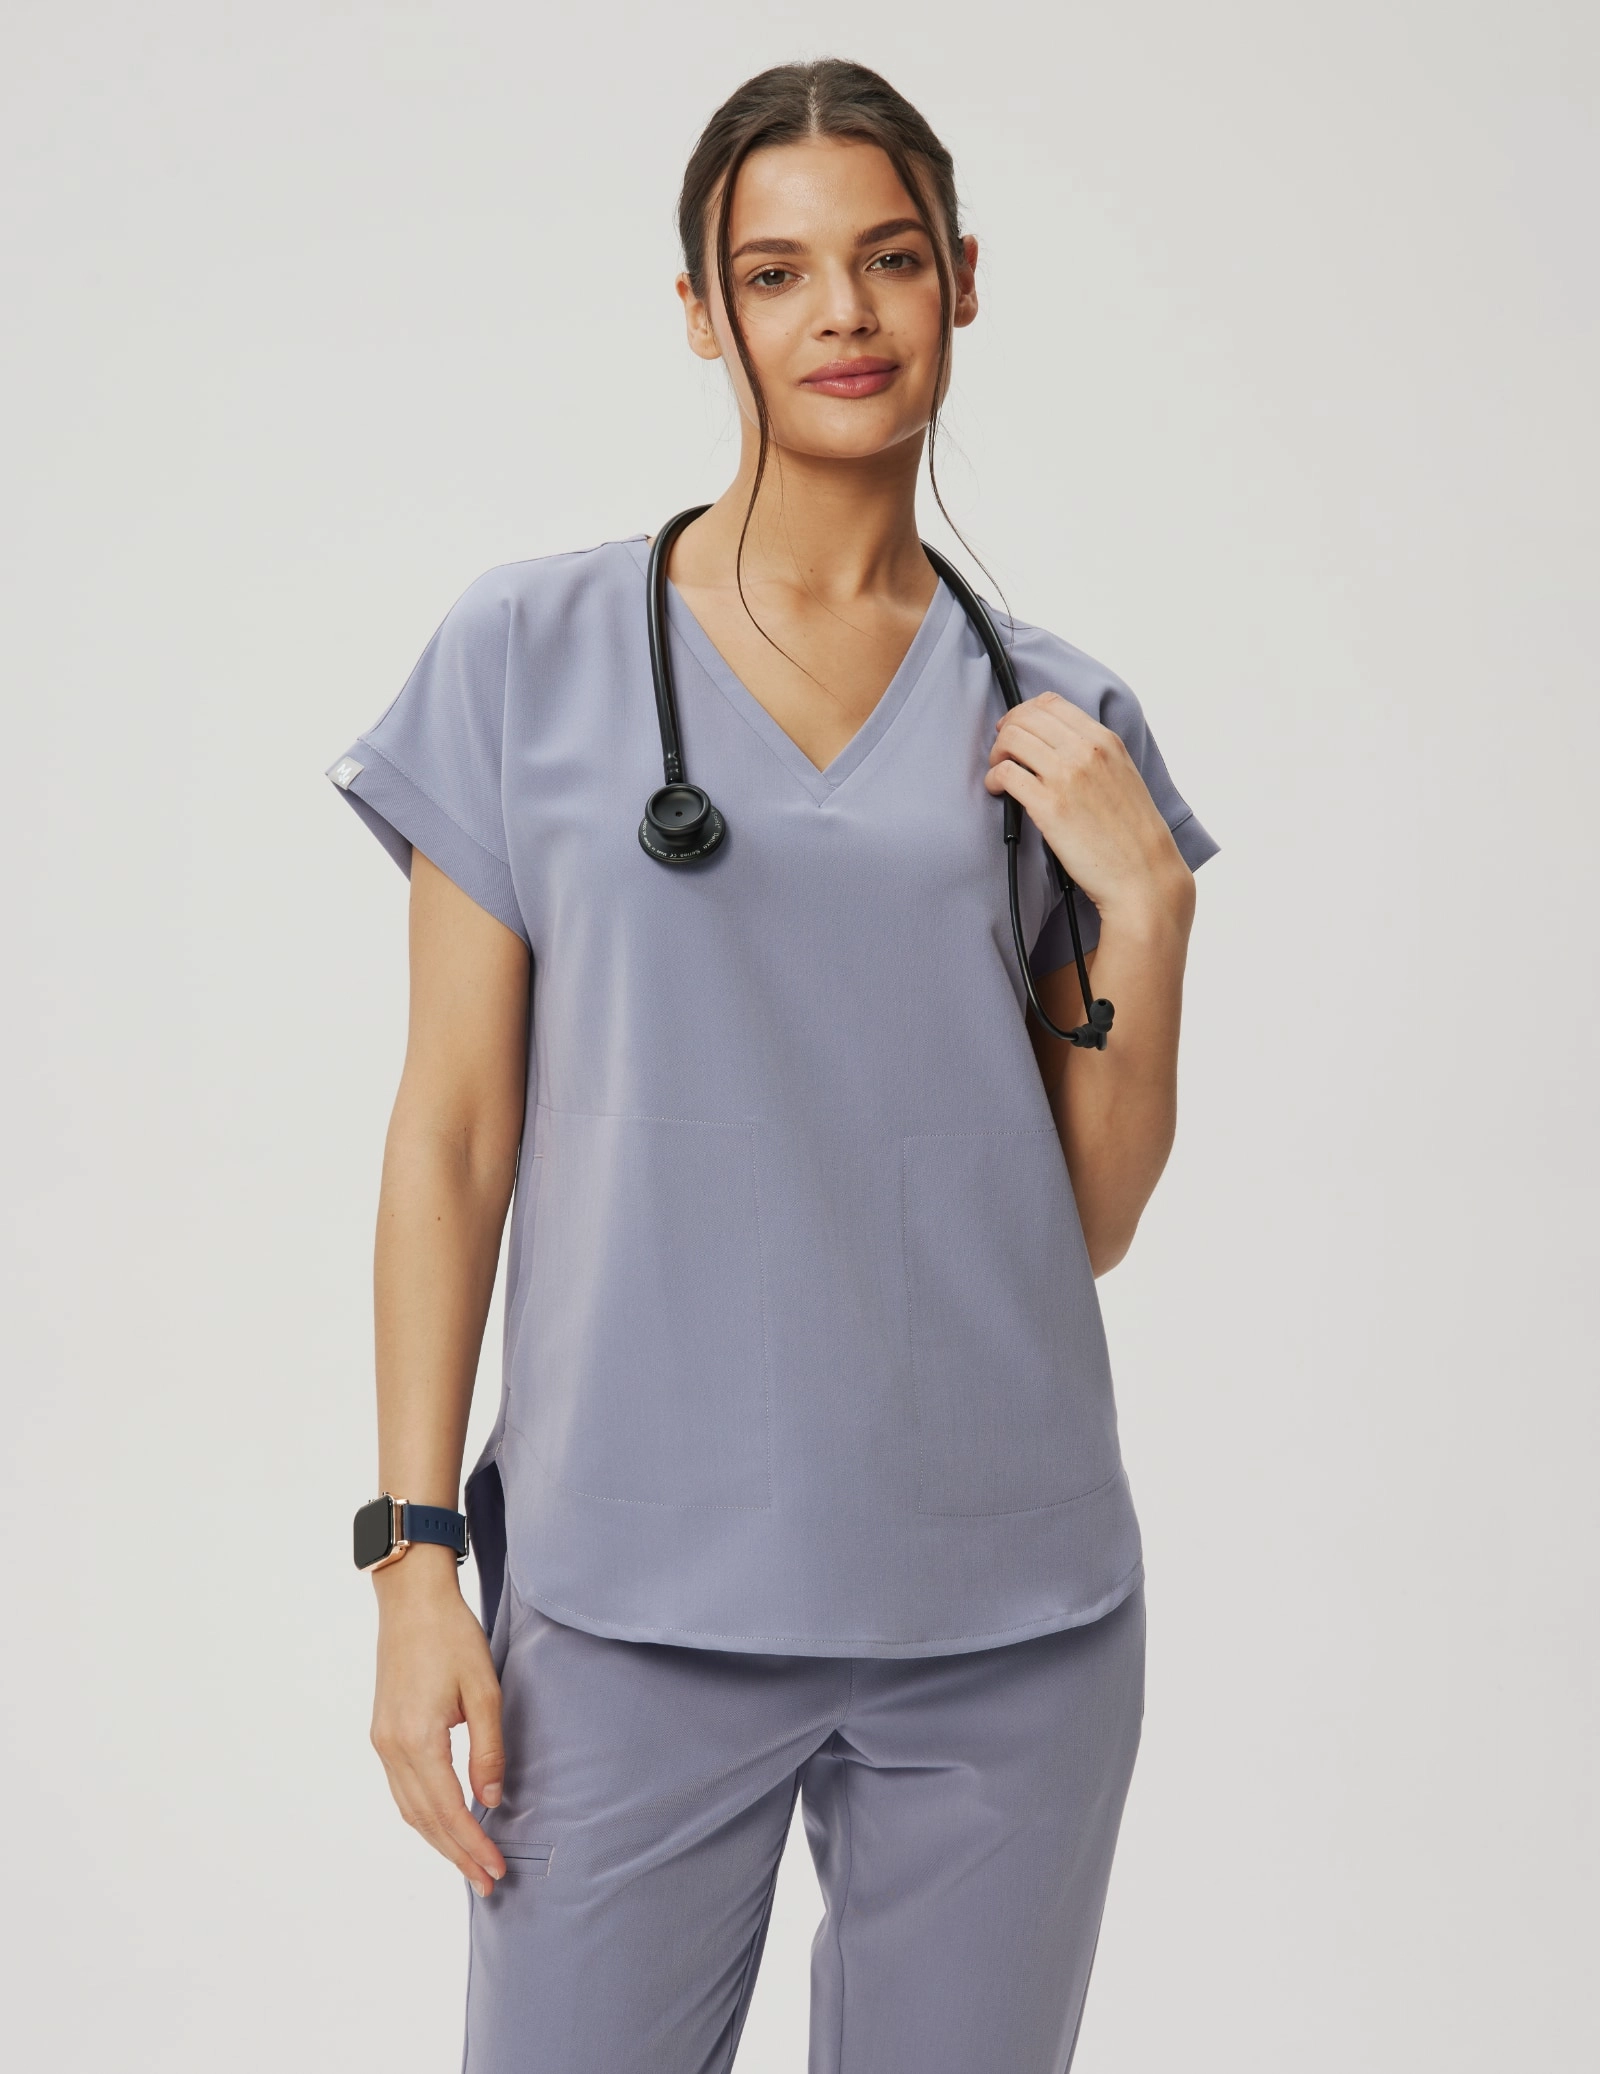 Bluza Medyczna Kendall - MILKY LAVENDER